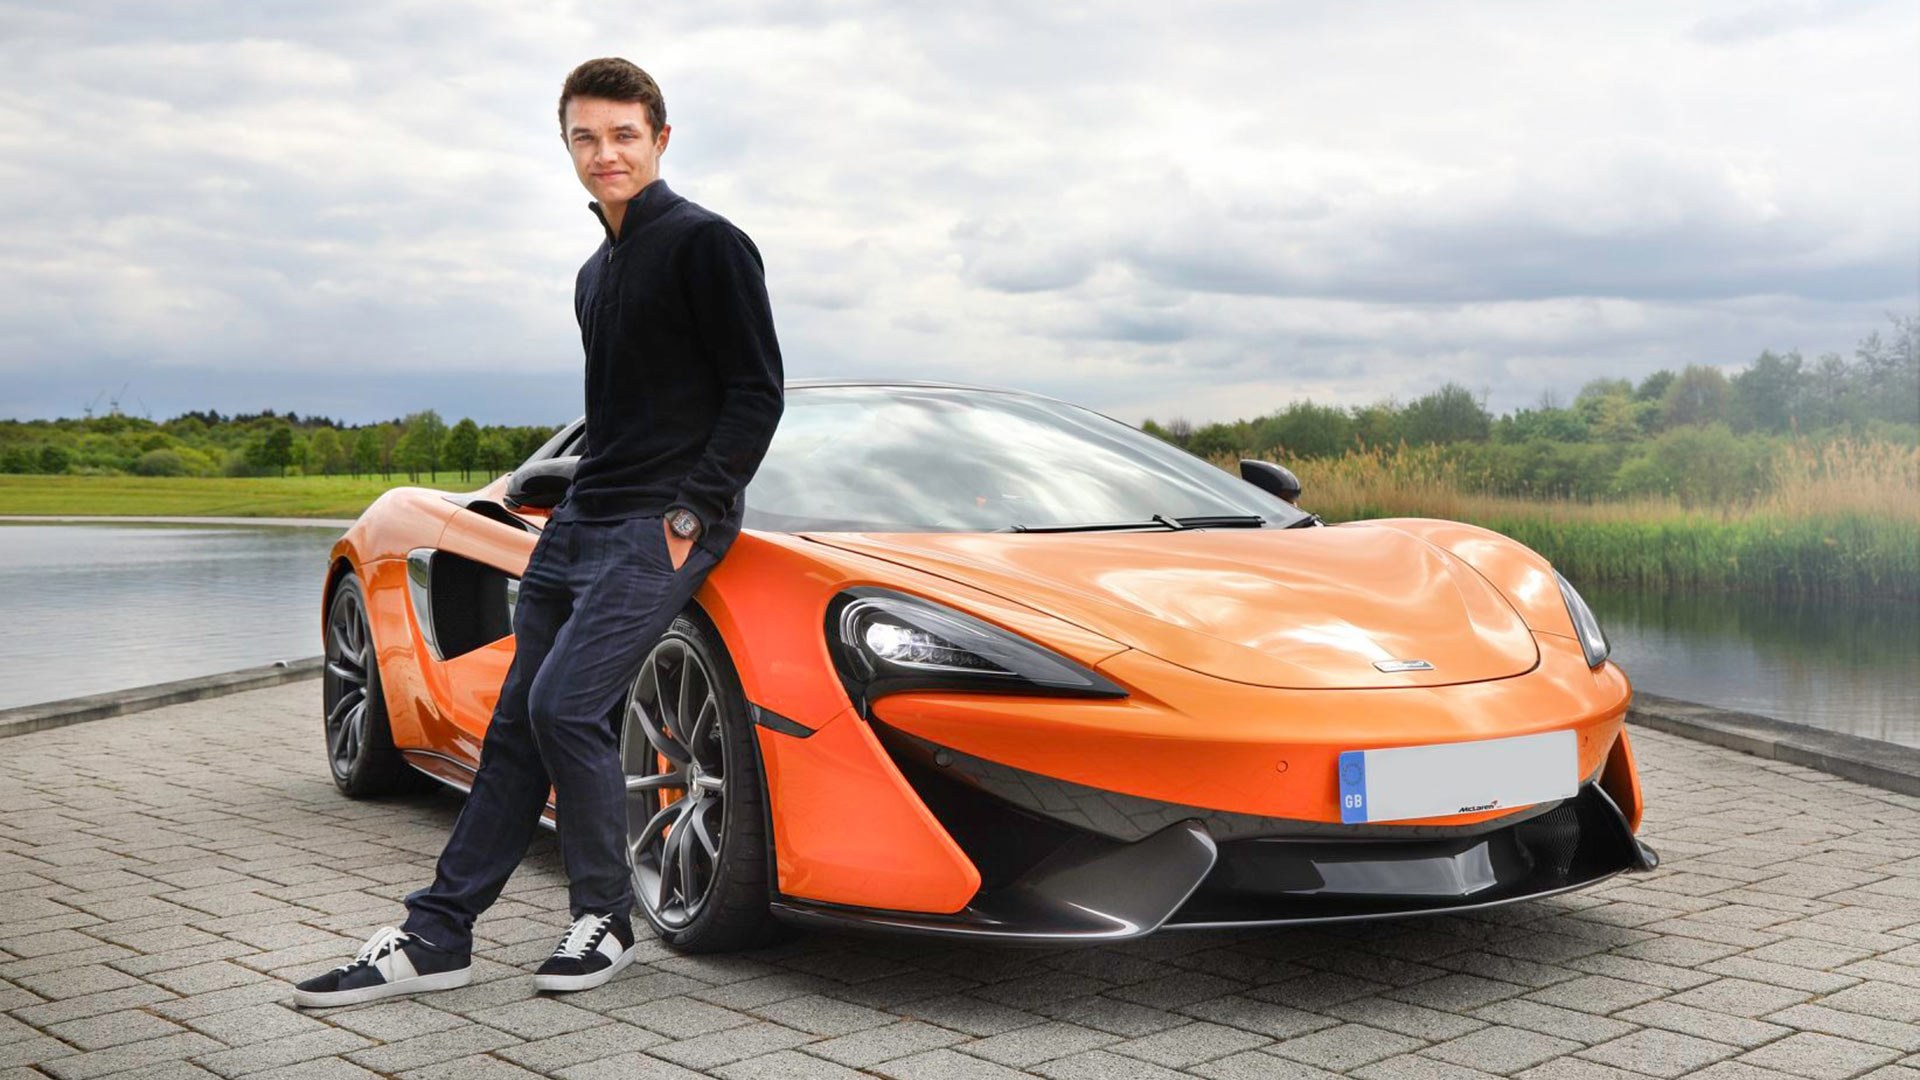 Lando-Norris-McLaren-Automotive-570S-Coupe-001.jpg